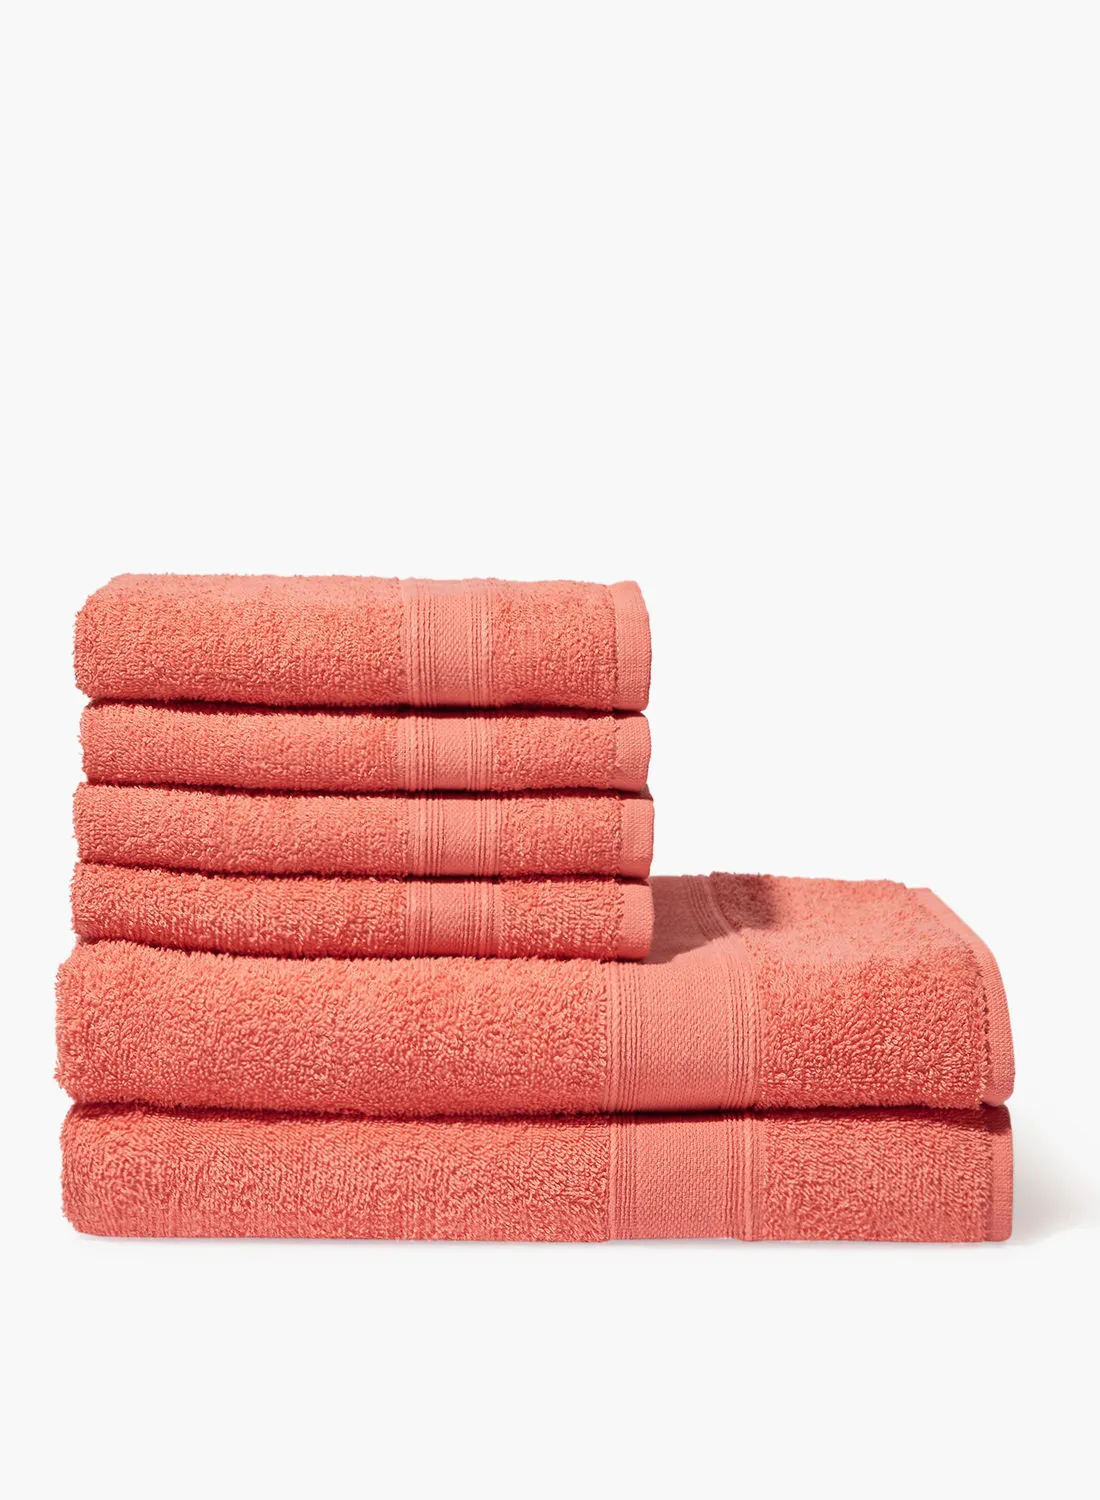 Amal 6 Piece Bathroom Towel Set - 400 GSM 100% Cotton Terry - 4 Hand Towel - 2 Bath Towel - Melon Color -Quick Dry - Super Absorbent